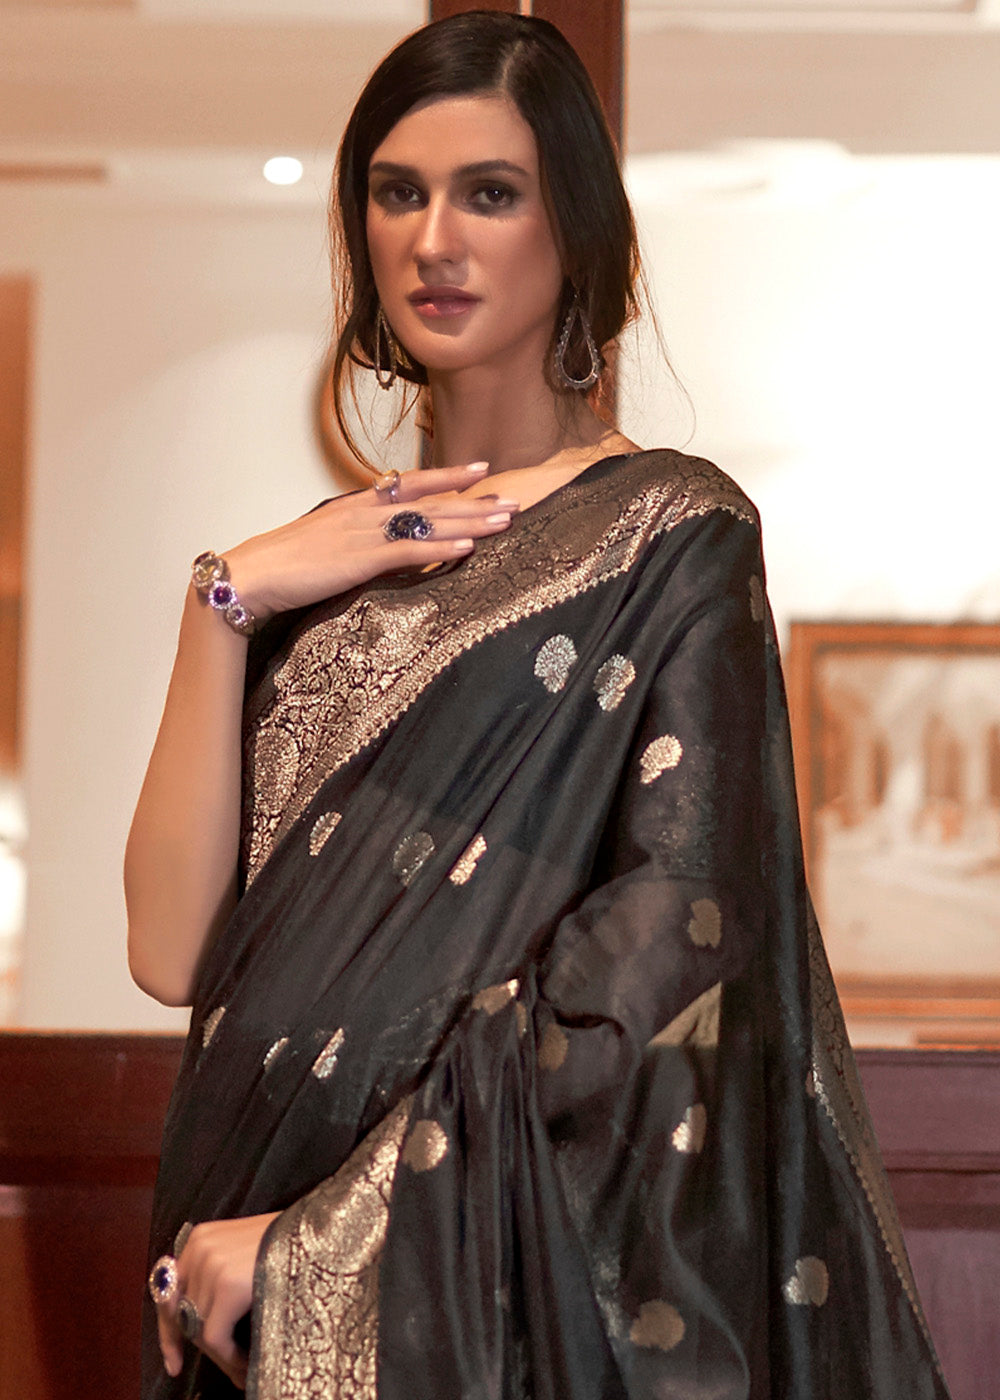 Midnight Black Woven Chanderi Banarasi Fusion Silk Saree - Colorful Saree